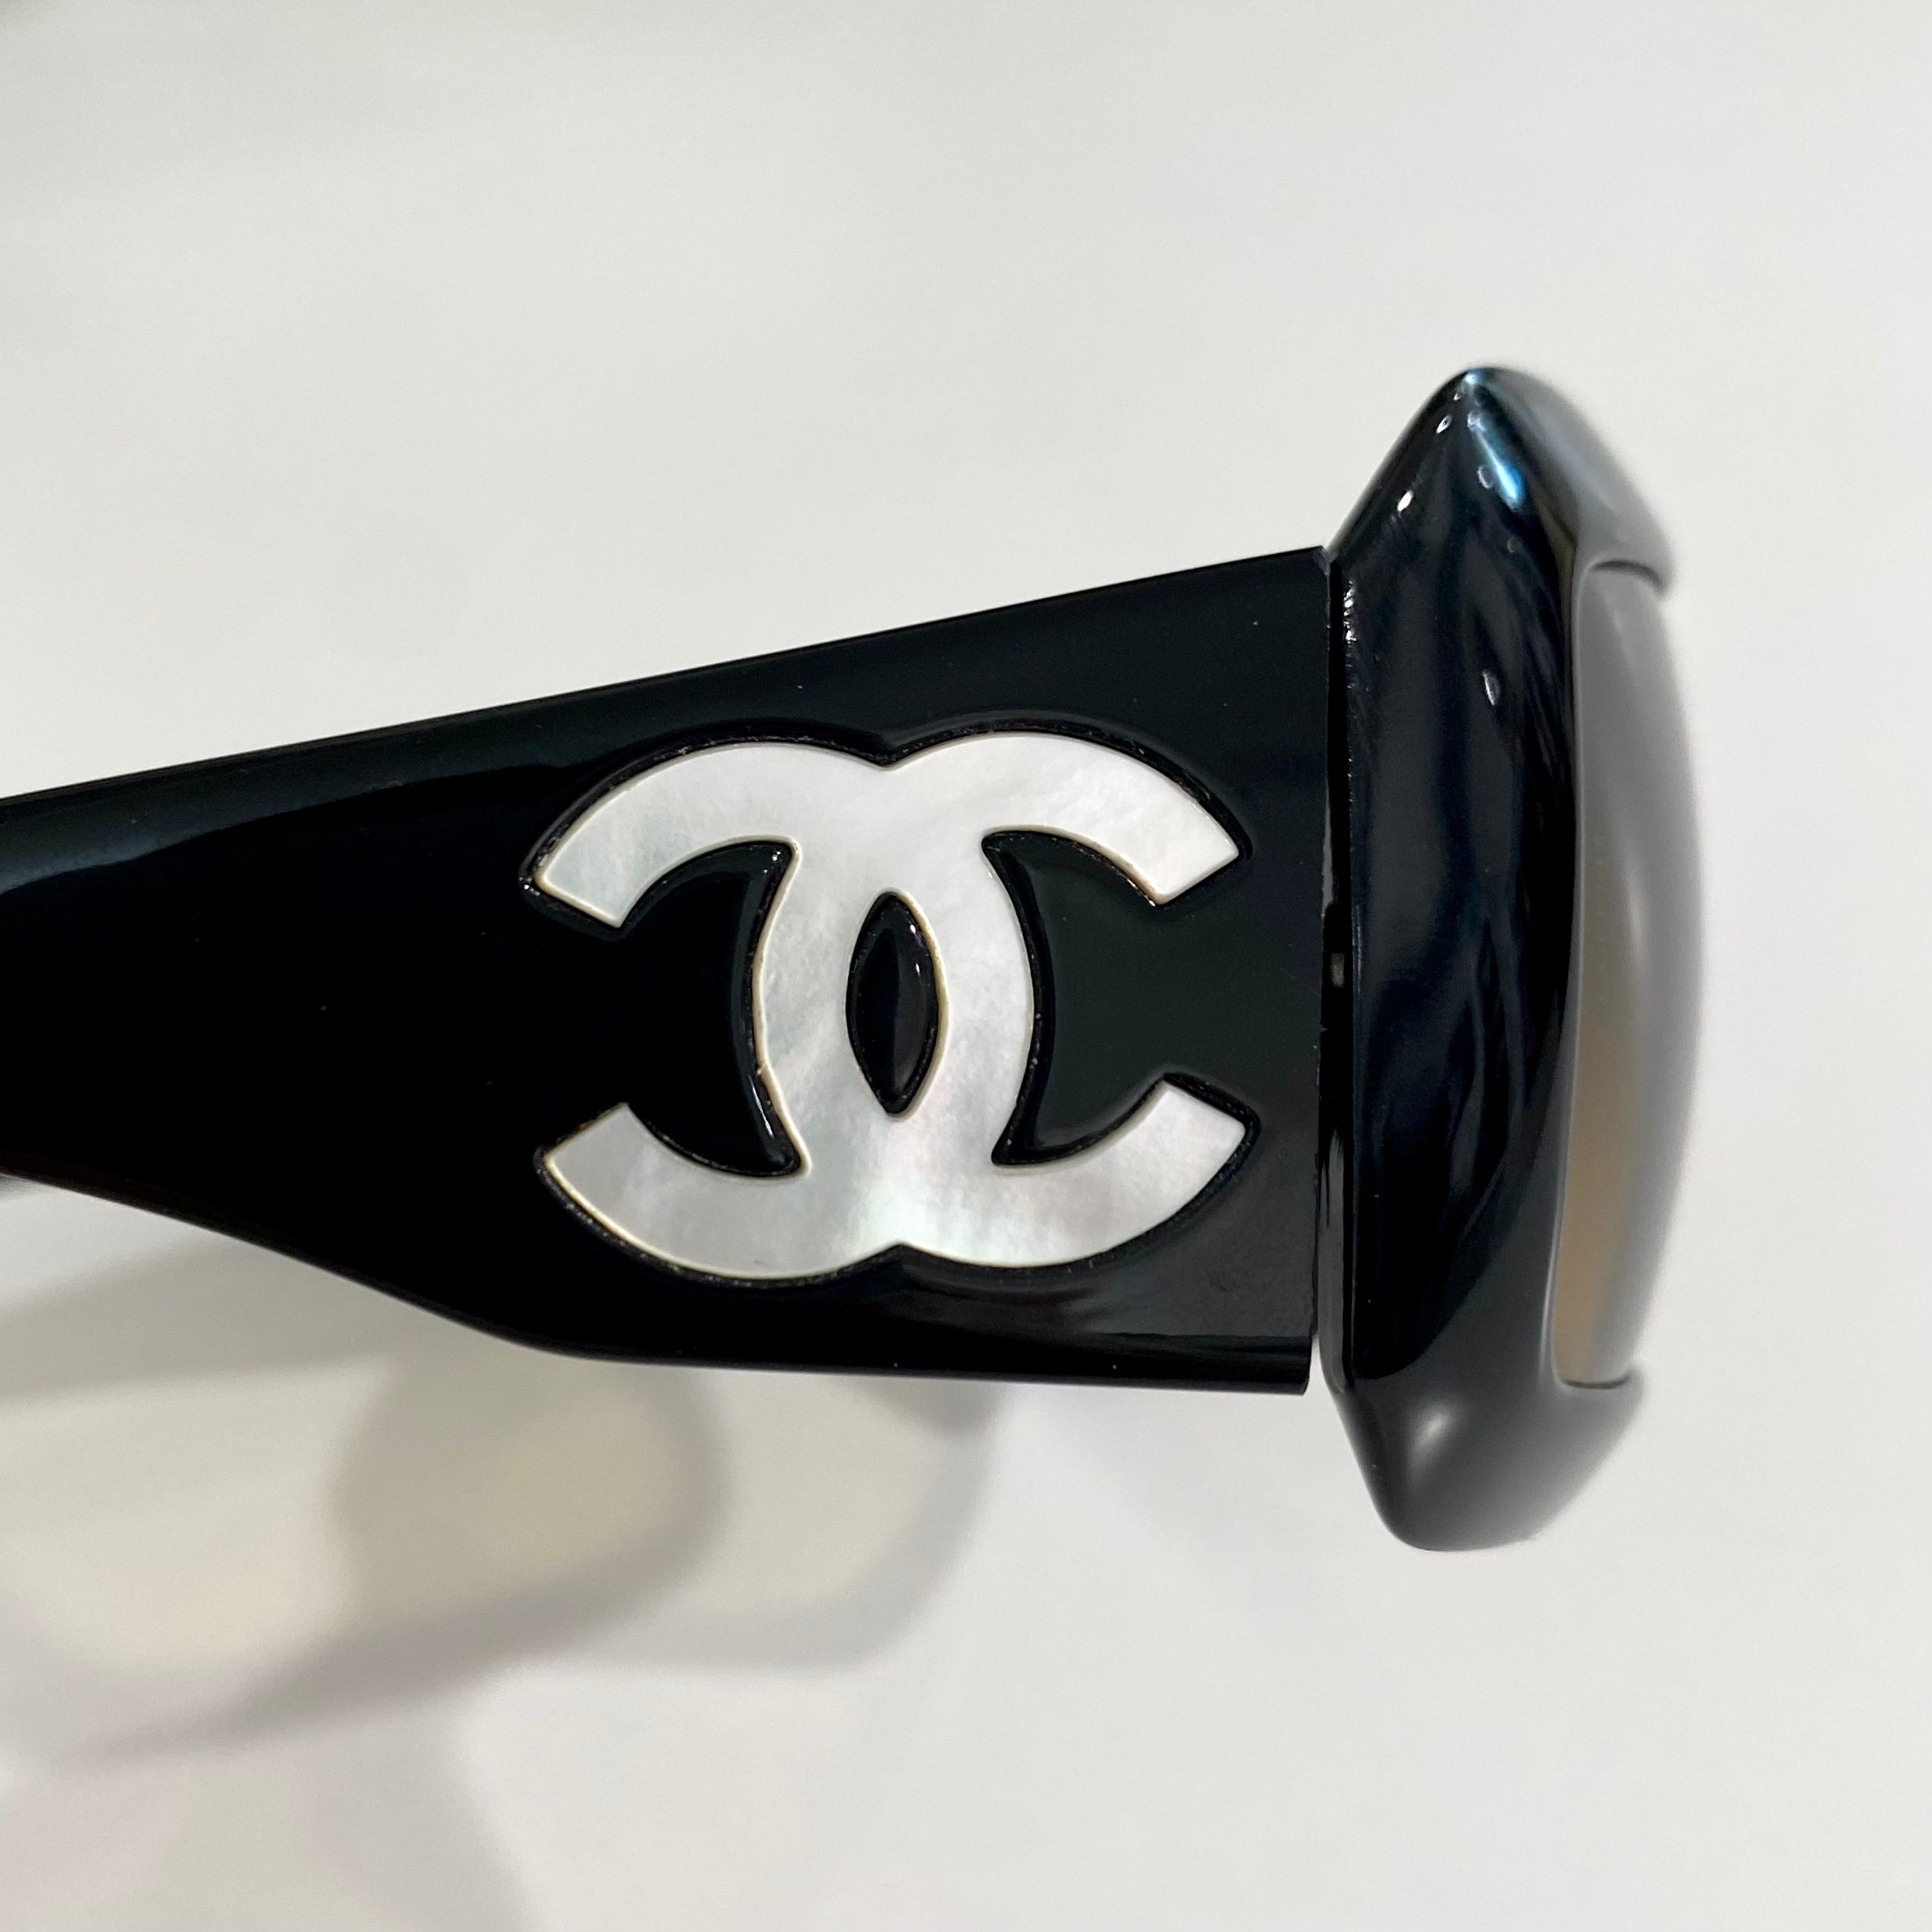 Chanel Black and Pearl CC Sunglasses